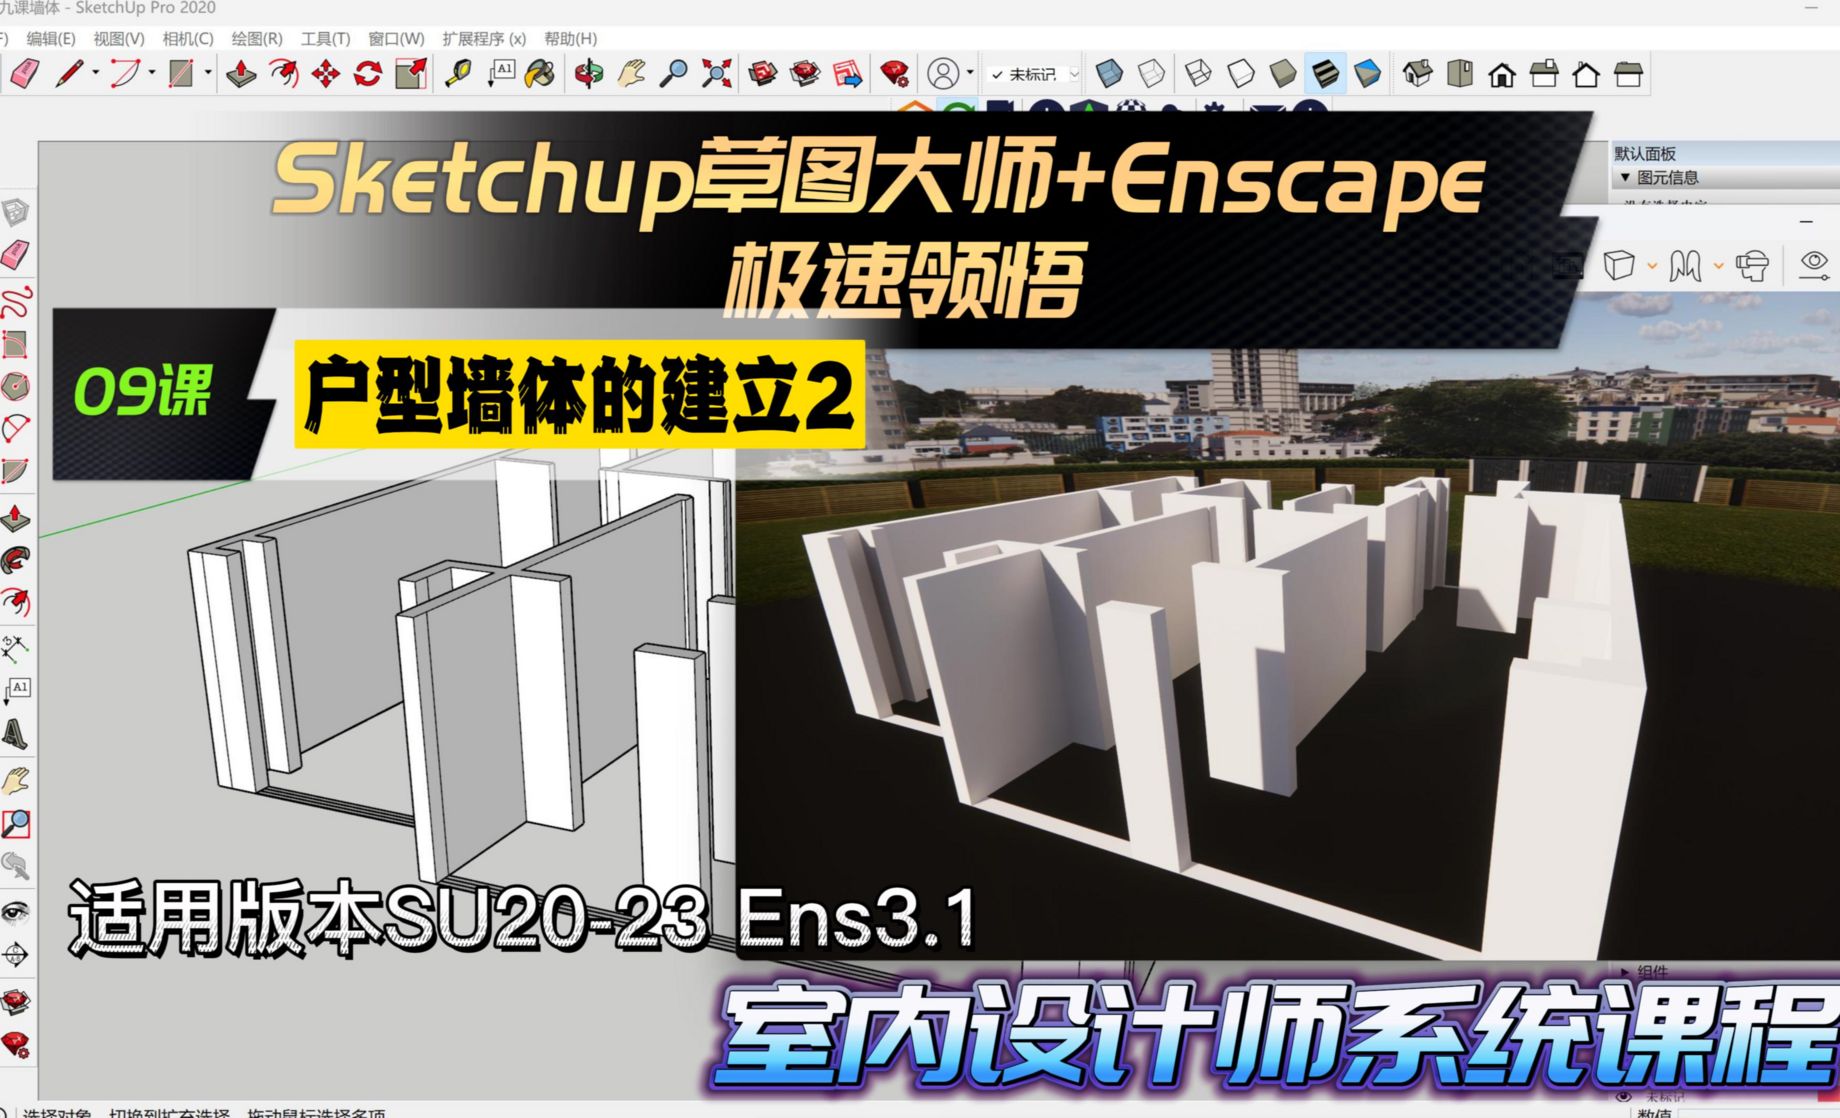 Sketchup+Enscape室内设计极速领悟-户型墙体的建立2